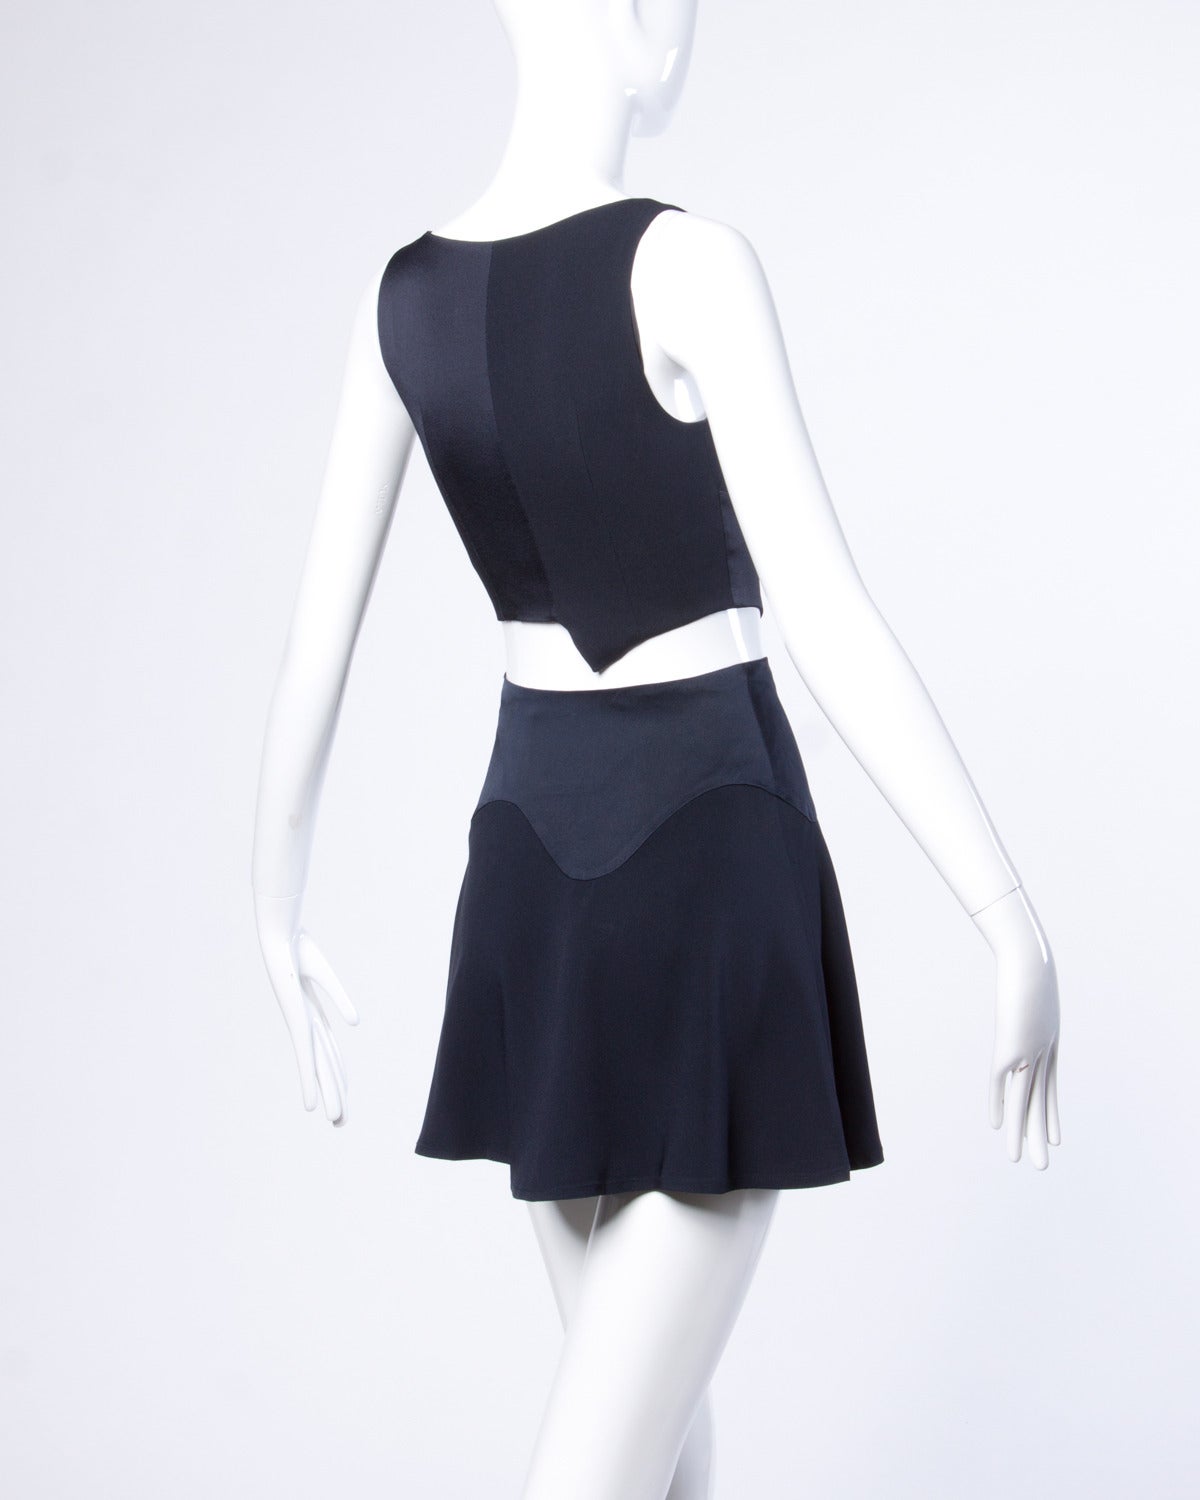 Black Moschino Vintage 1990s 90s Asymmetric Crop Top + Skirt Ensemble 2-Pc Set